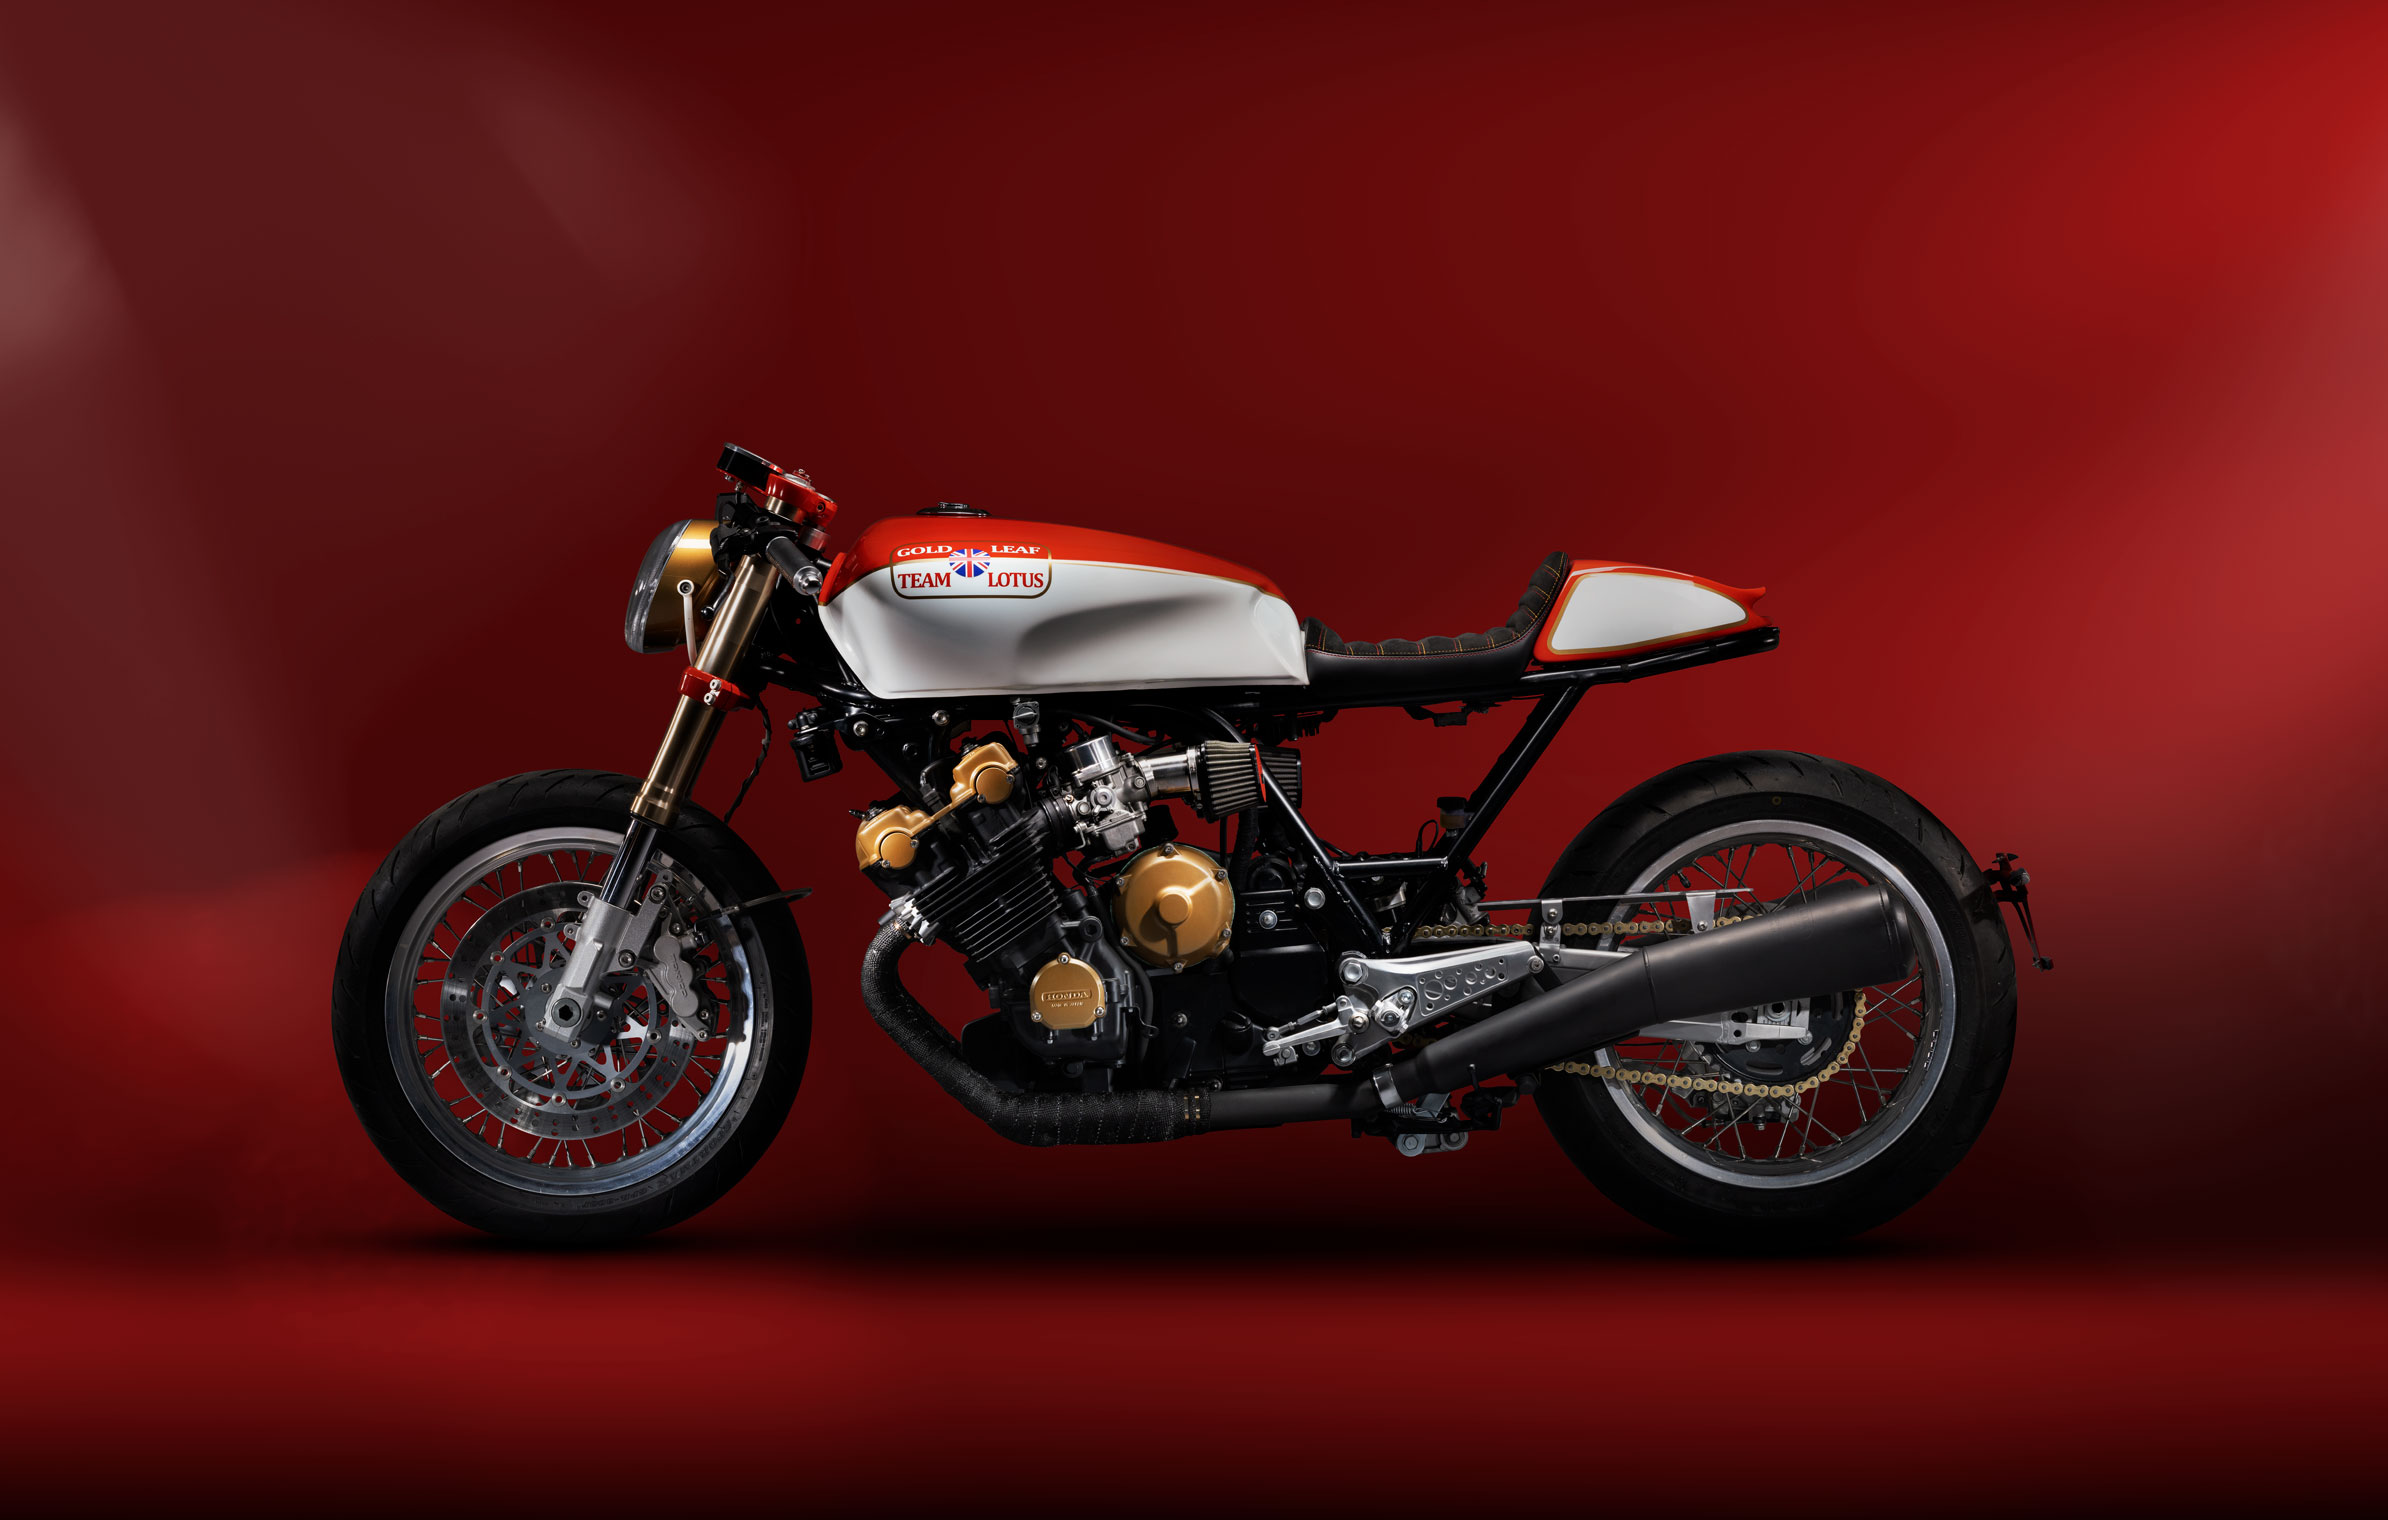 2titan-custum-built-motorcycle-2022-red-honda